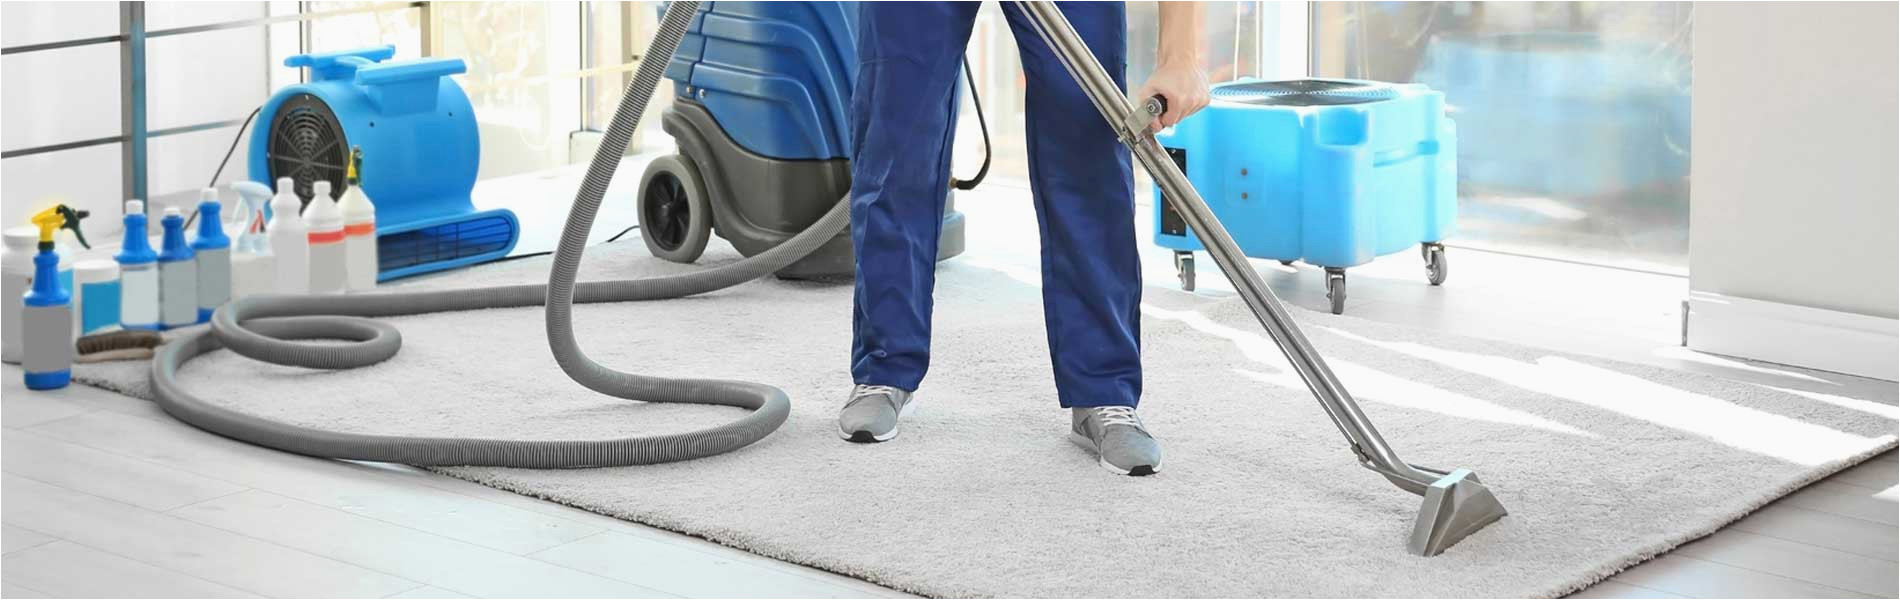 Area Rug Cleaning Phoenix Az Apex Carpet Cleaning Cleaning Services Phoenix, Az